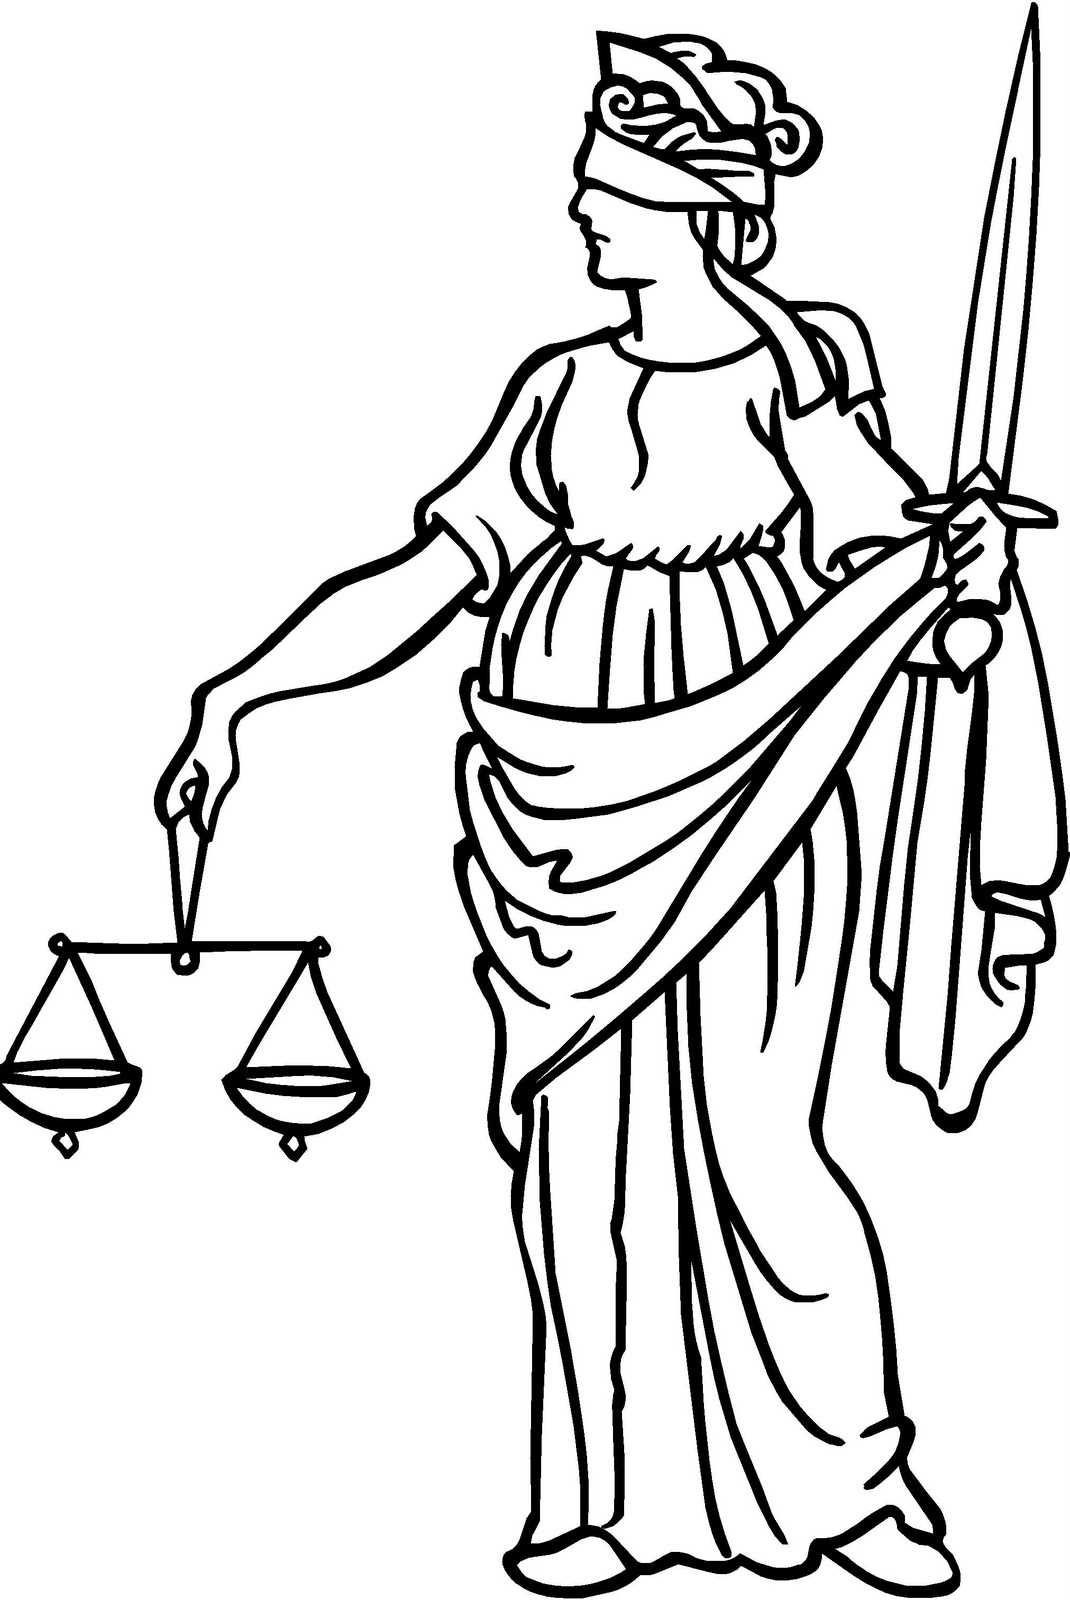 Jurisprudence essays natural law